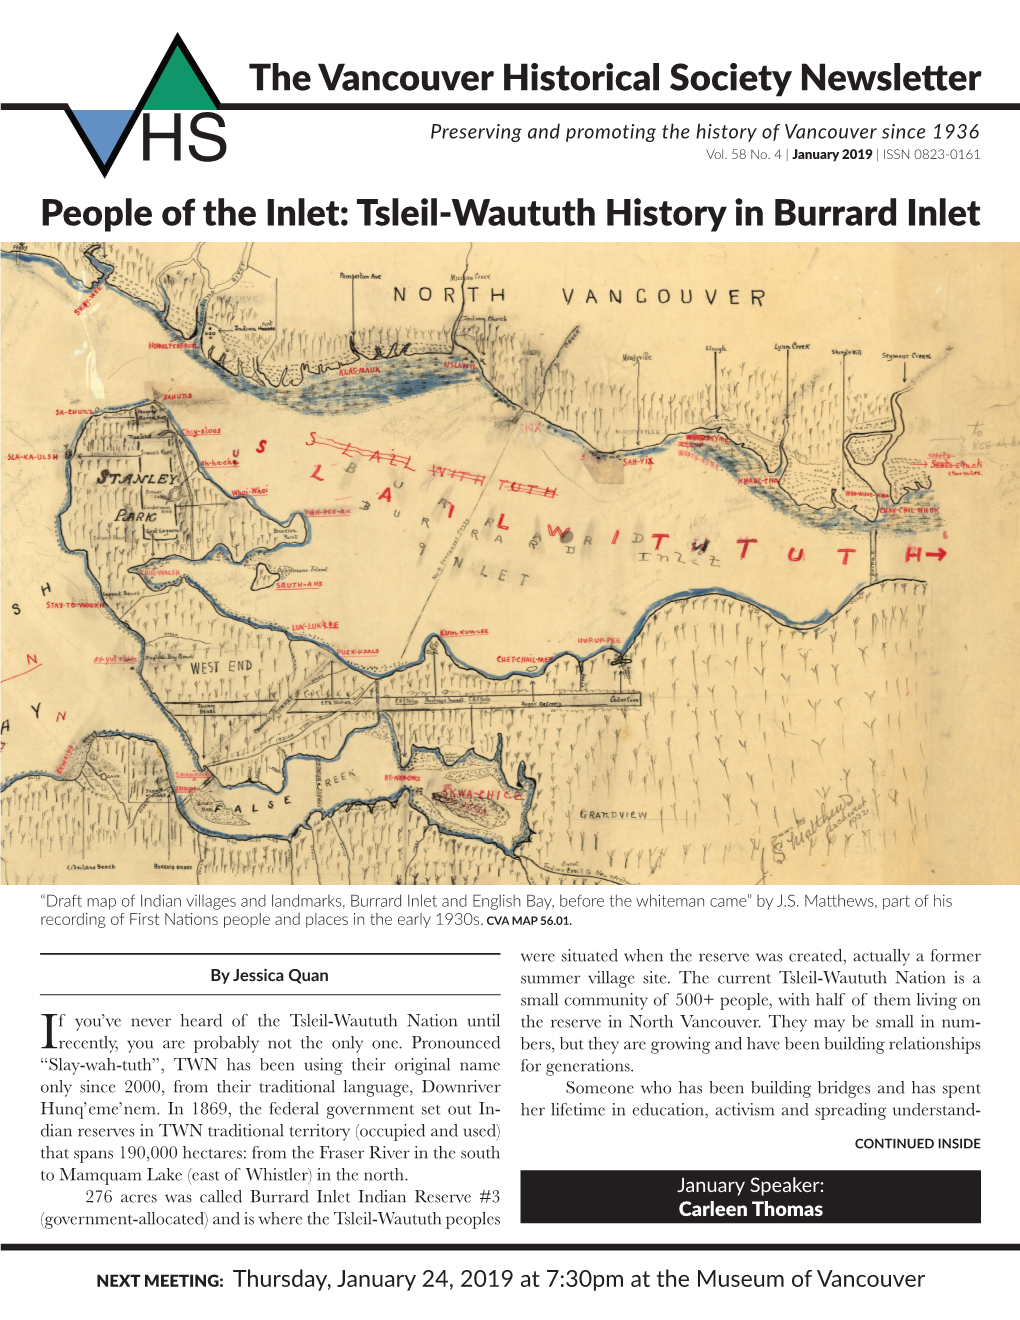 Tsleil-Waututh History in Burrard Inlet